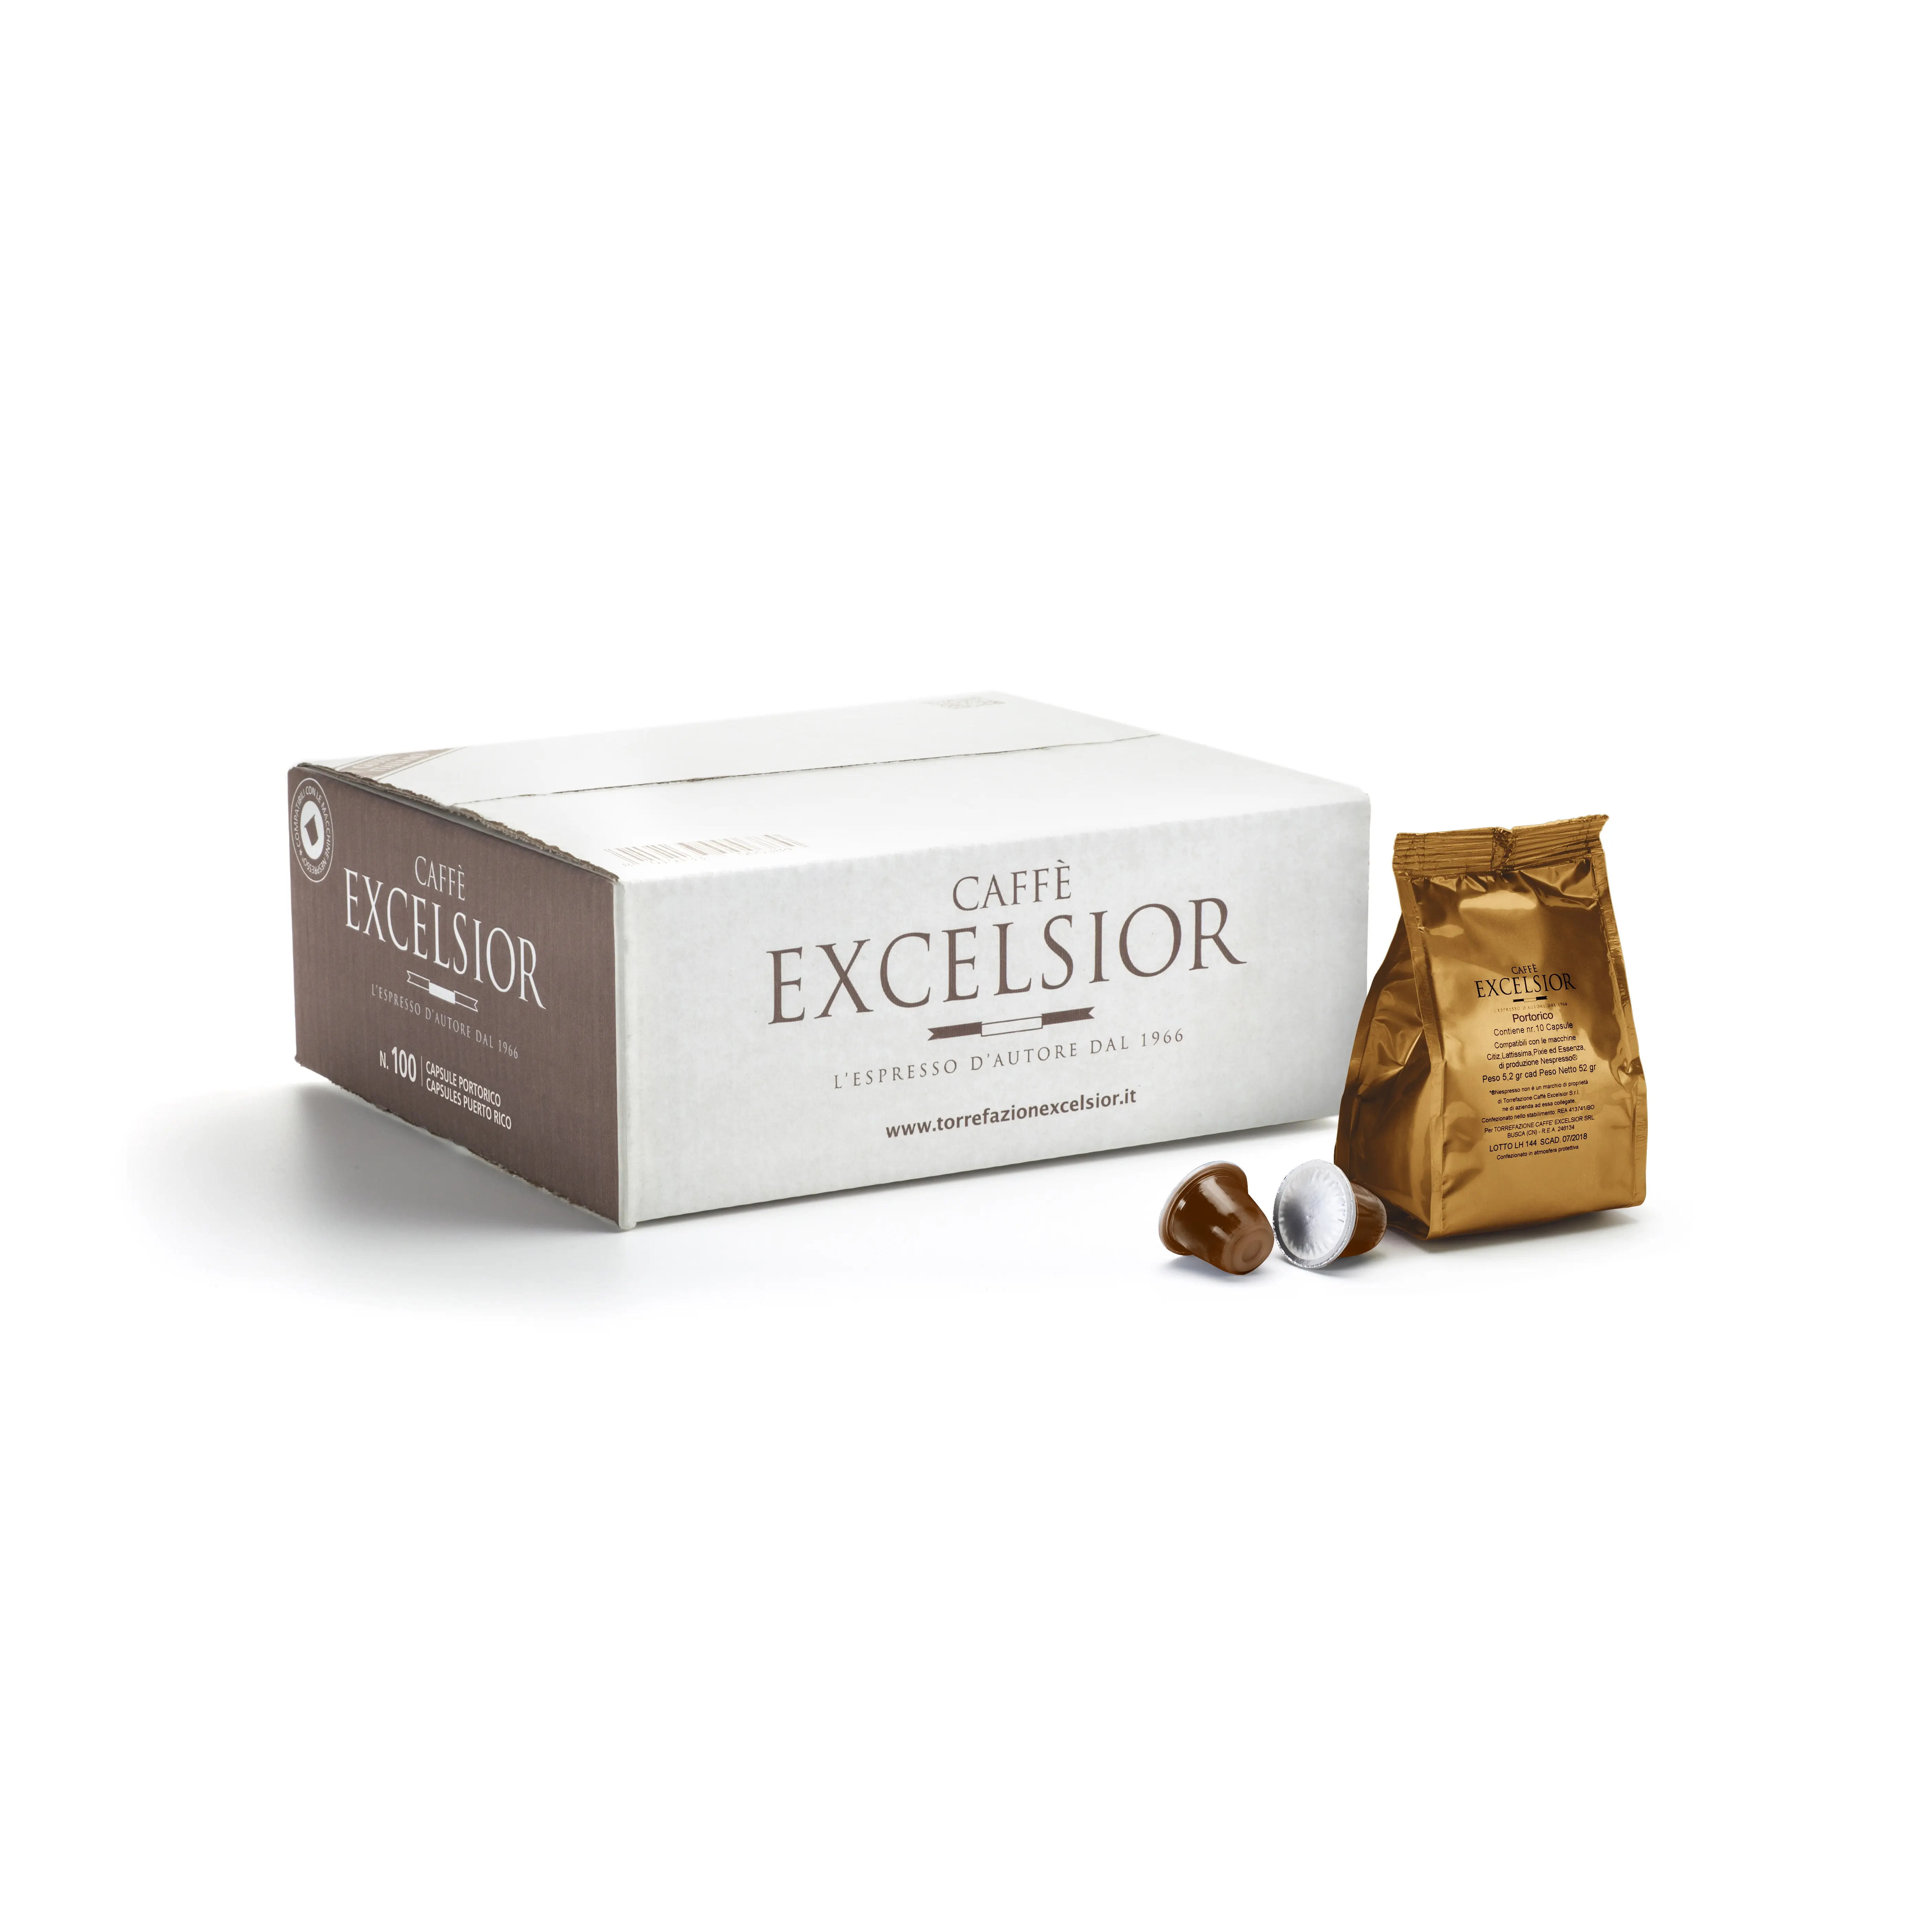 Premium Medium Roast Coffee Made in Italy capsules nespresso compatible 100% Arabica Sweet Taste Portorico